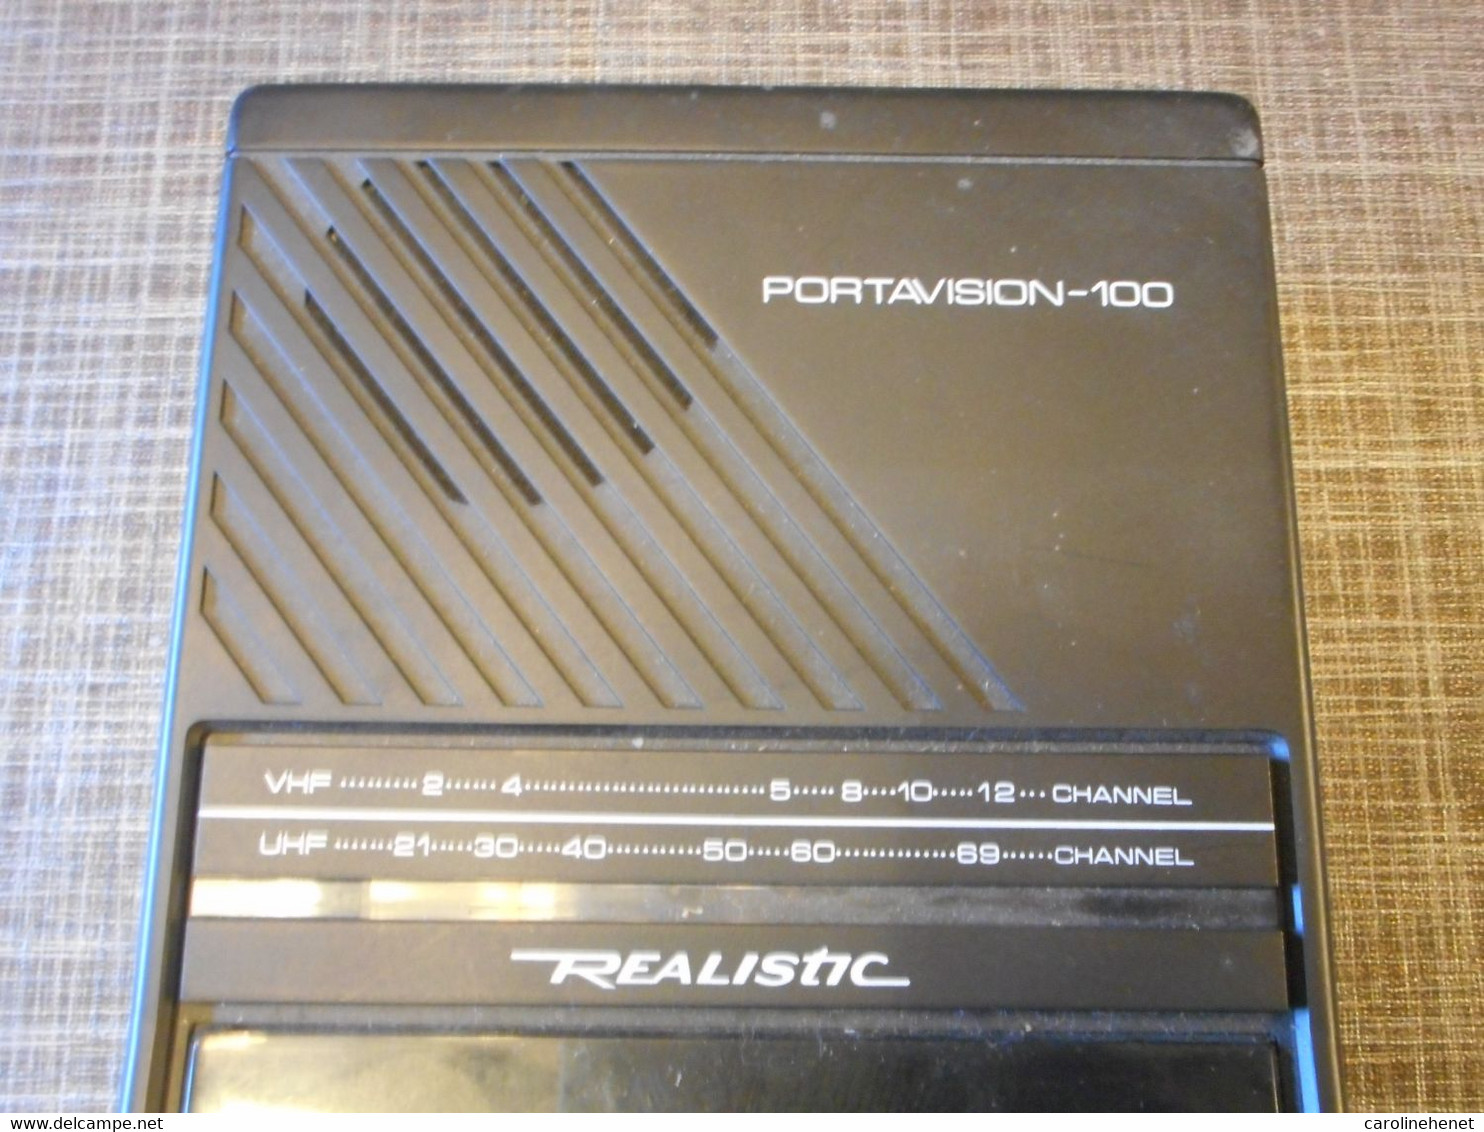 PORTAVISION-100 Realistic - Television